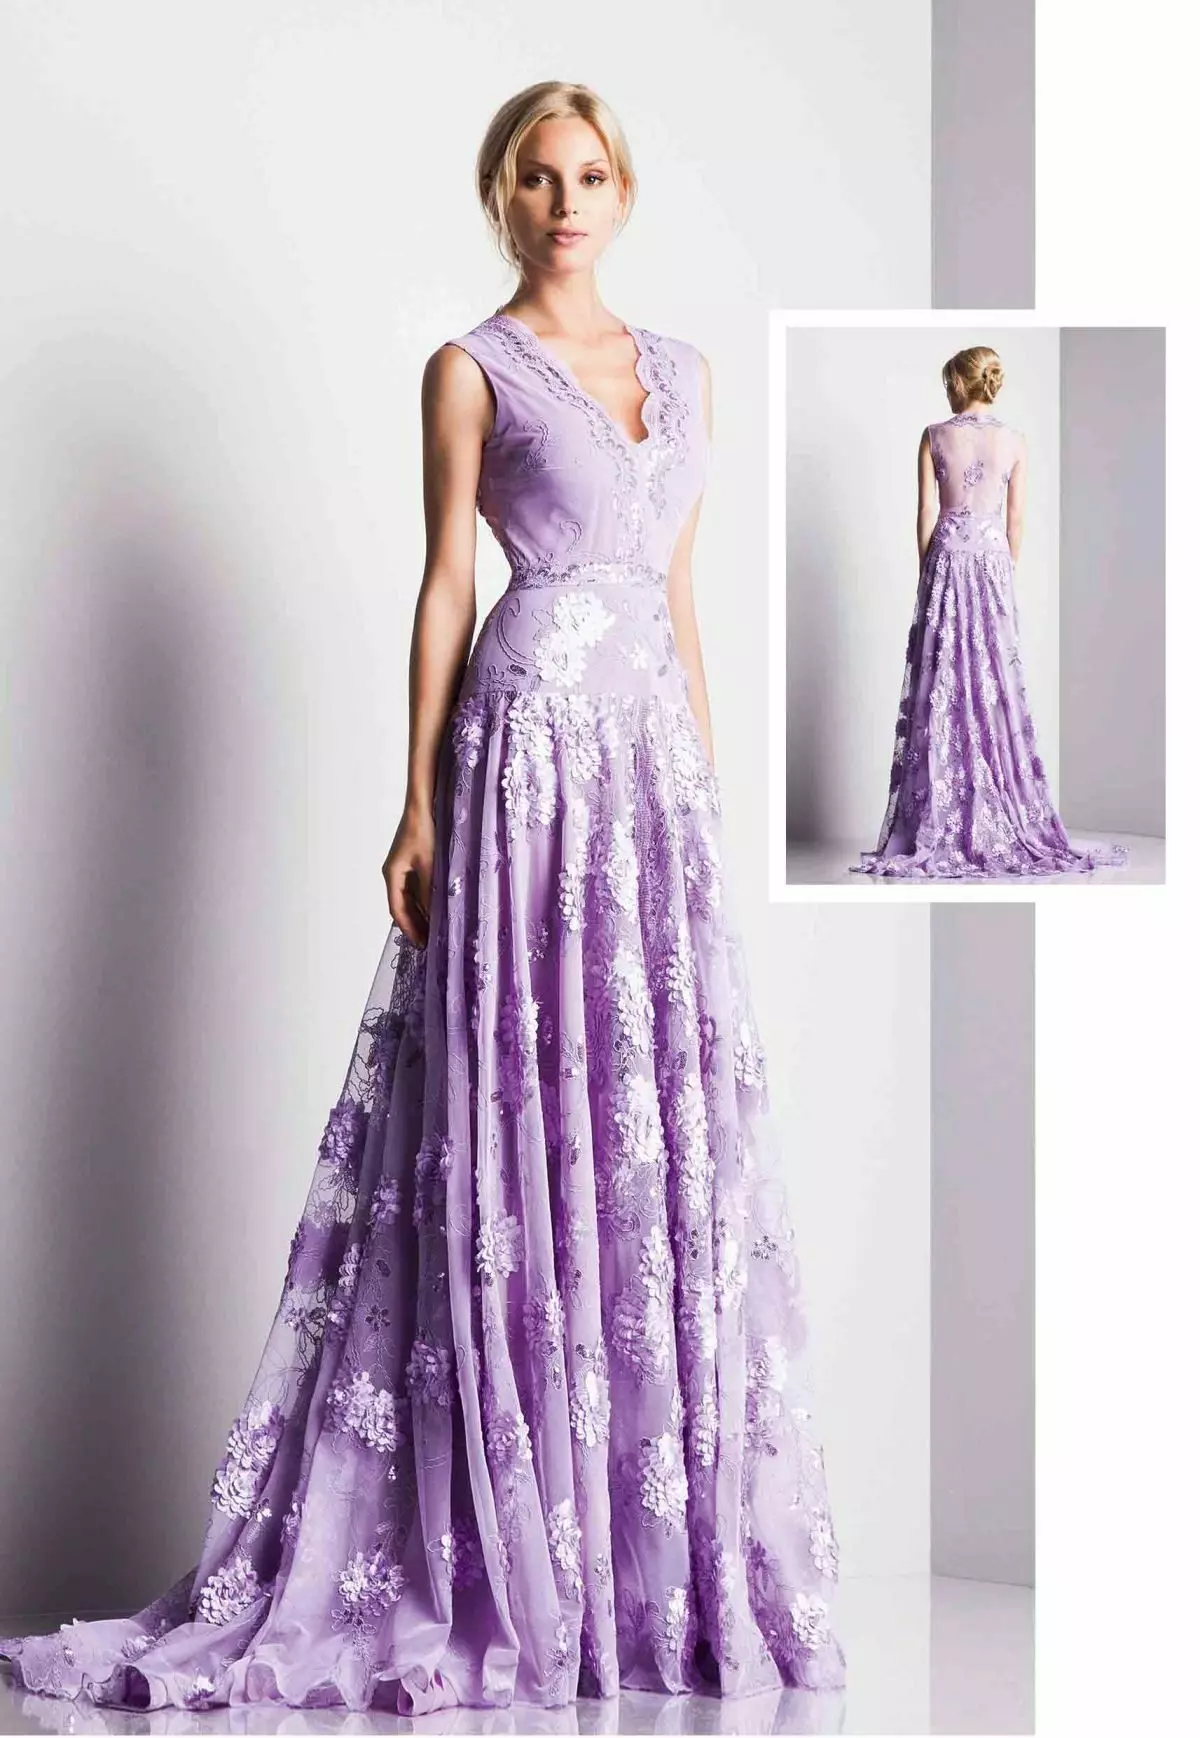 I-Lilac dress for blonde